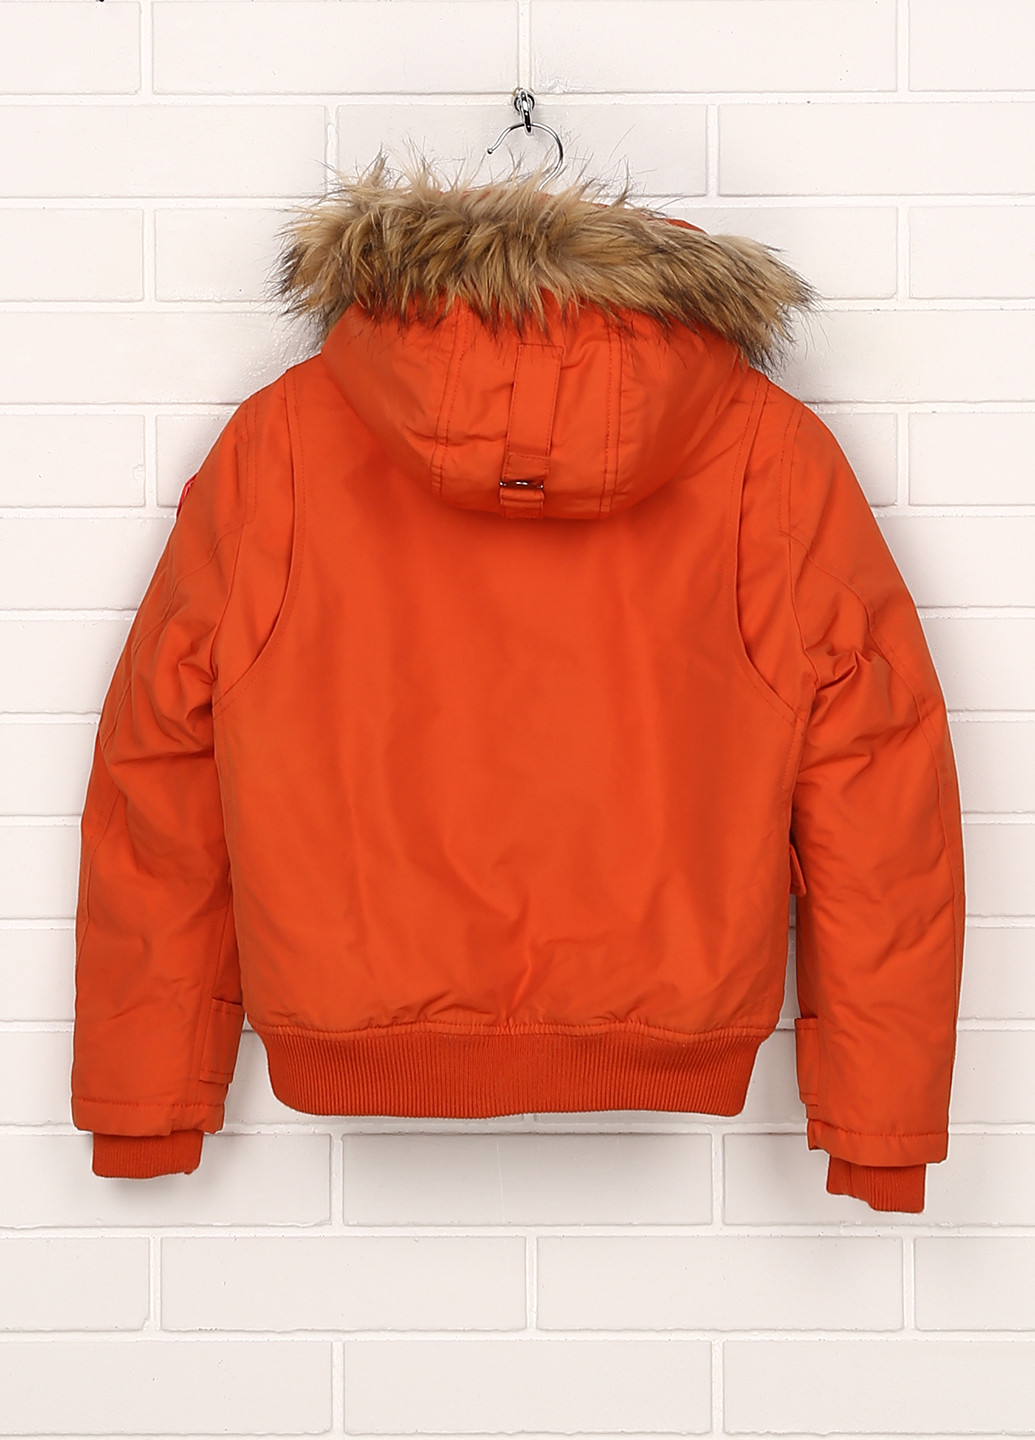 Оранжевая зимняя куртка Blauer